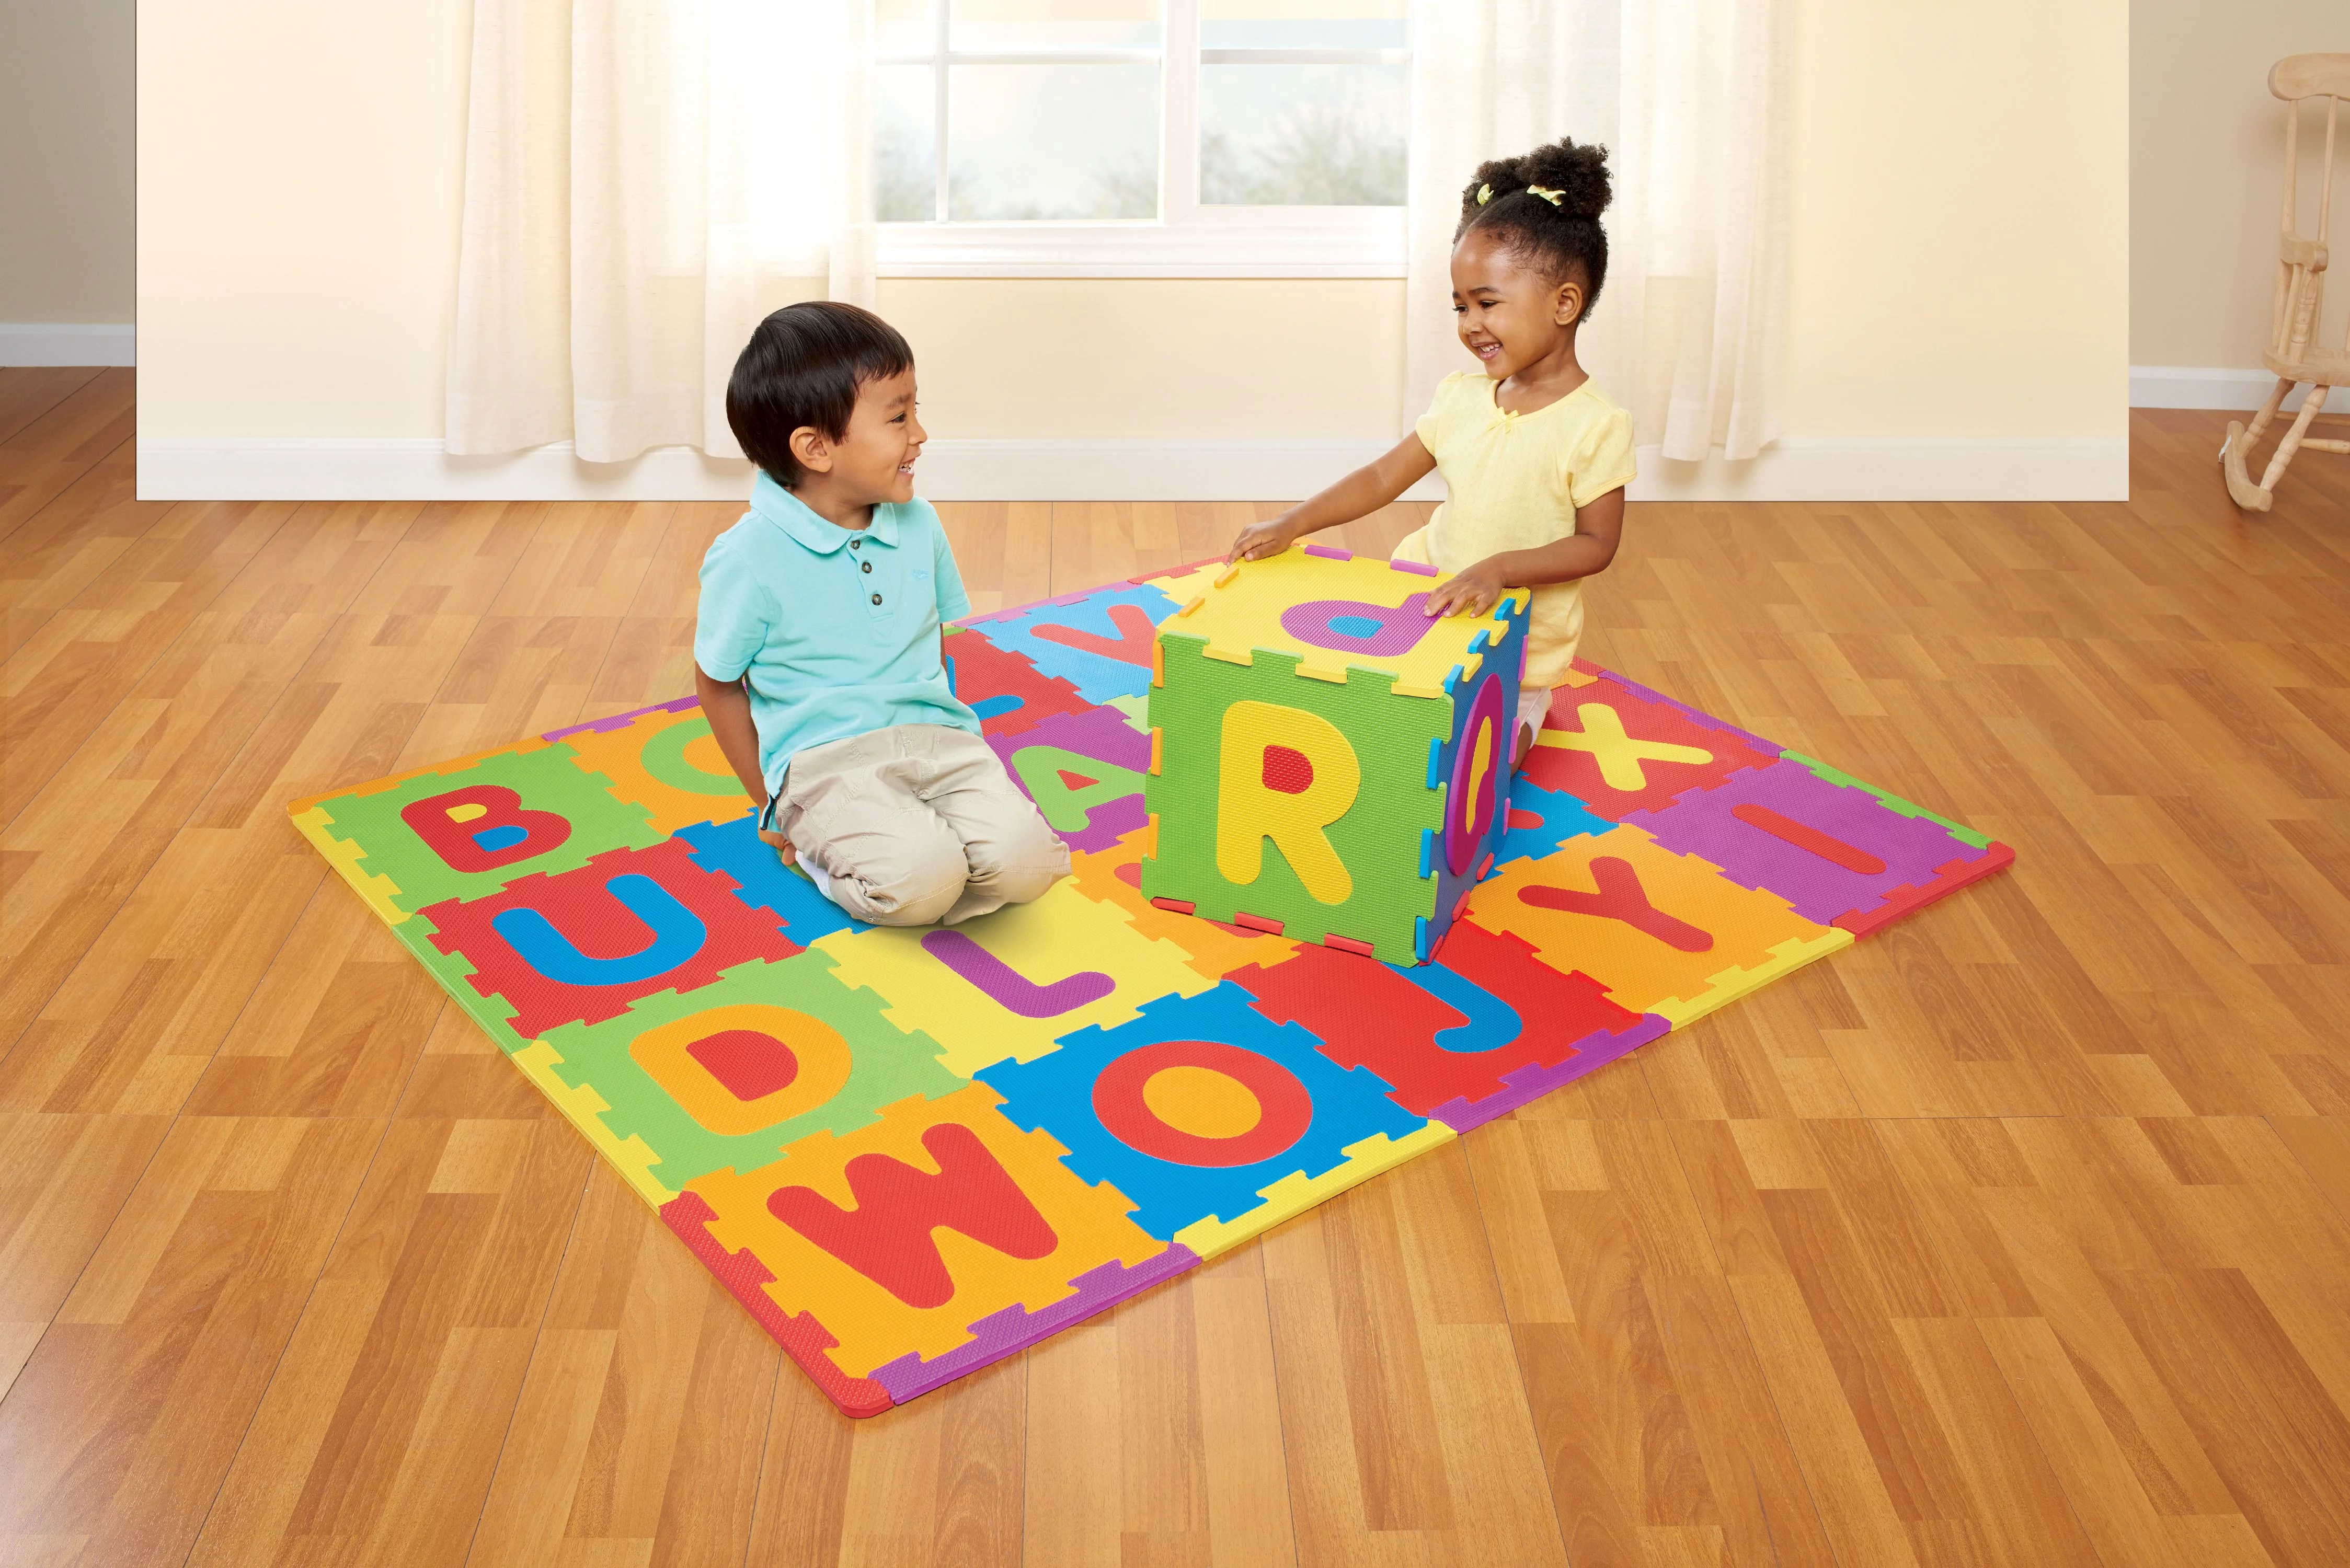 Spark. Create. Imagine. ABC Foam Playmat Learning Toy Set, 28 Pieces, Preschool